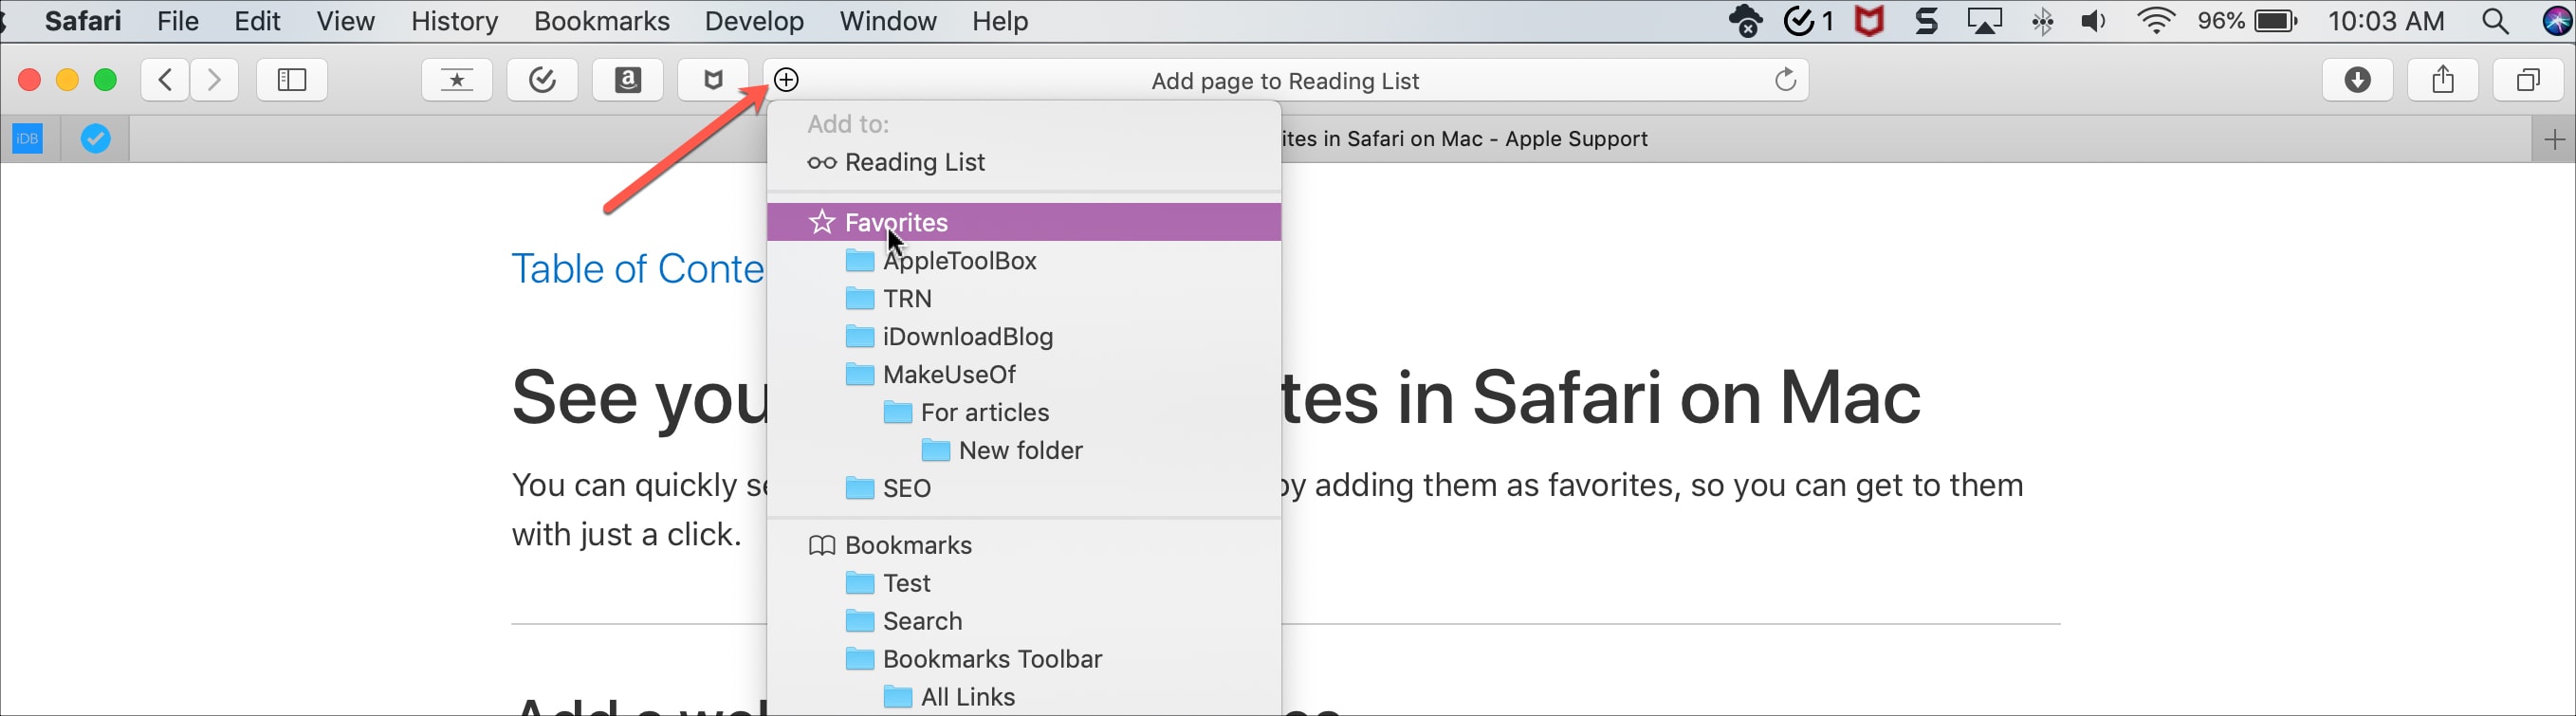 How to add Favorites in Safari on iPhone, iPad and Mac | Mid Atlantic